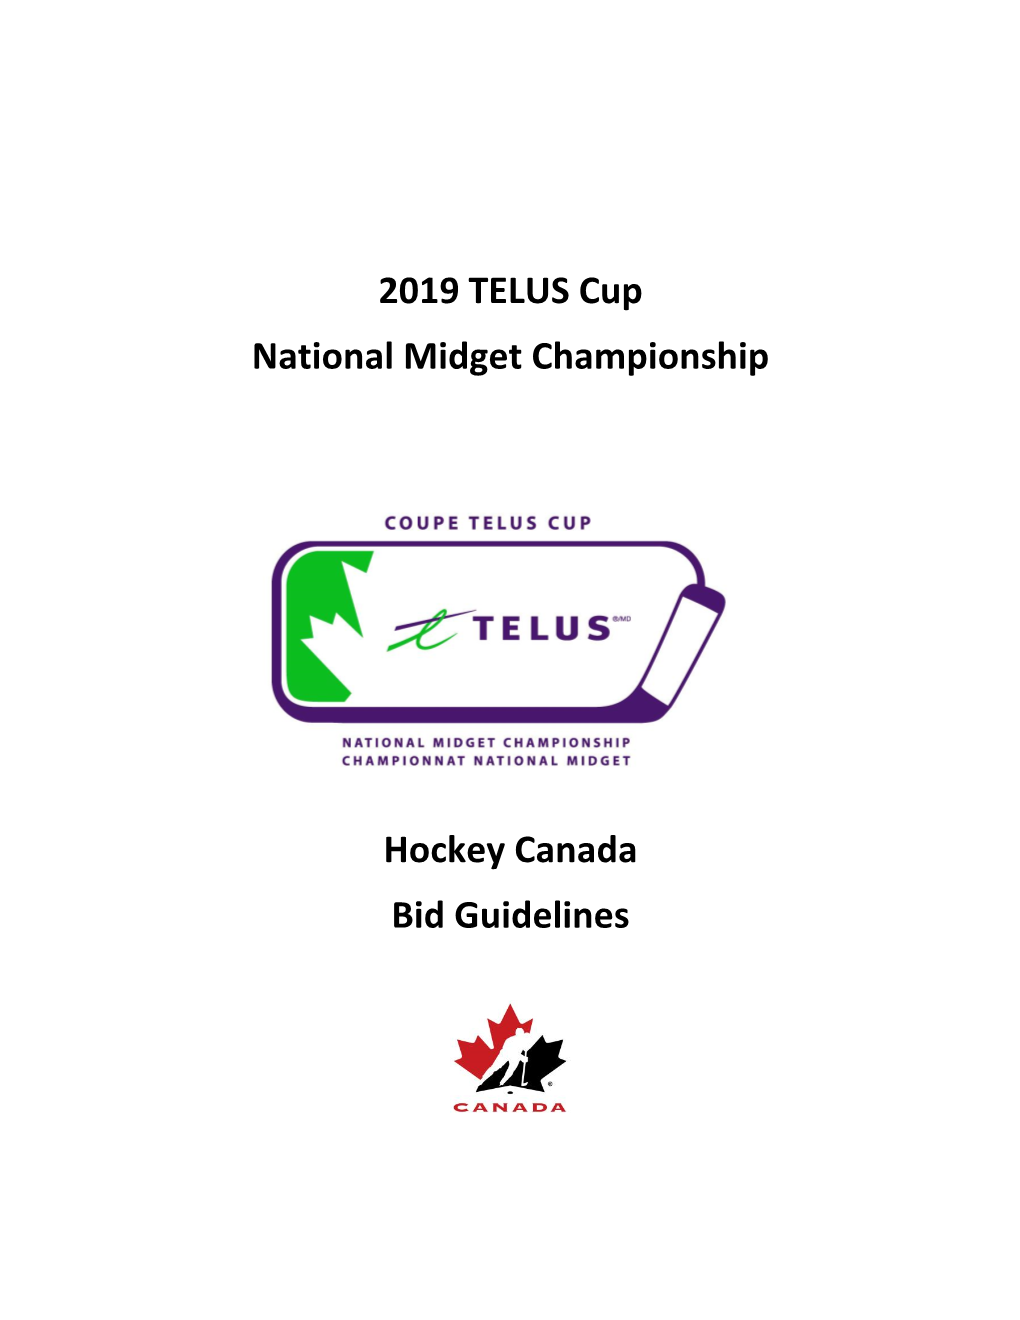 2019 TELUS Cup National Midget Championship